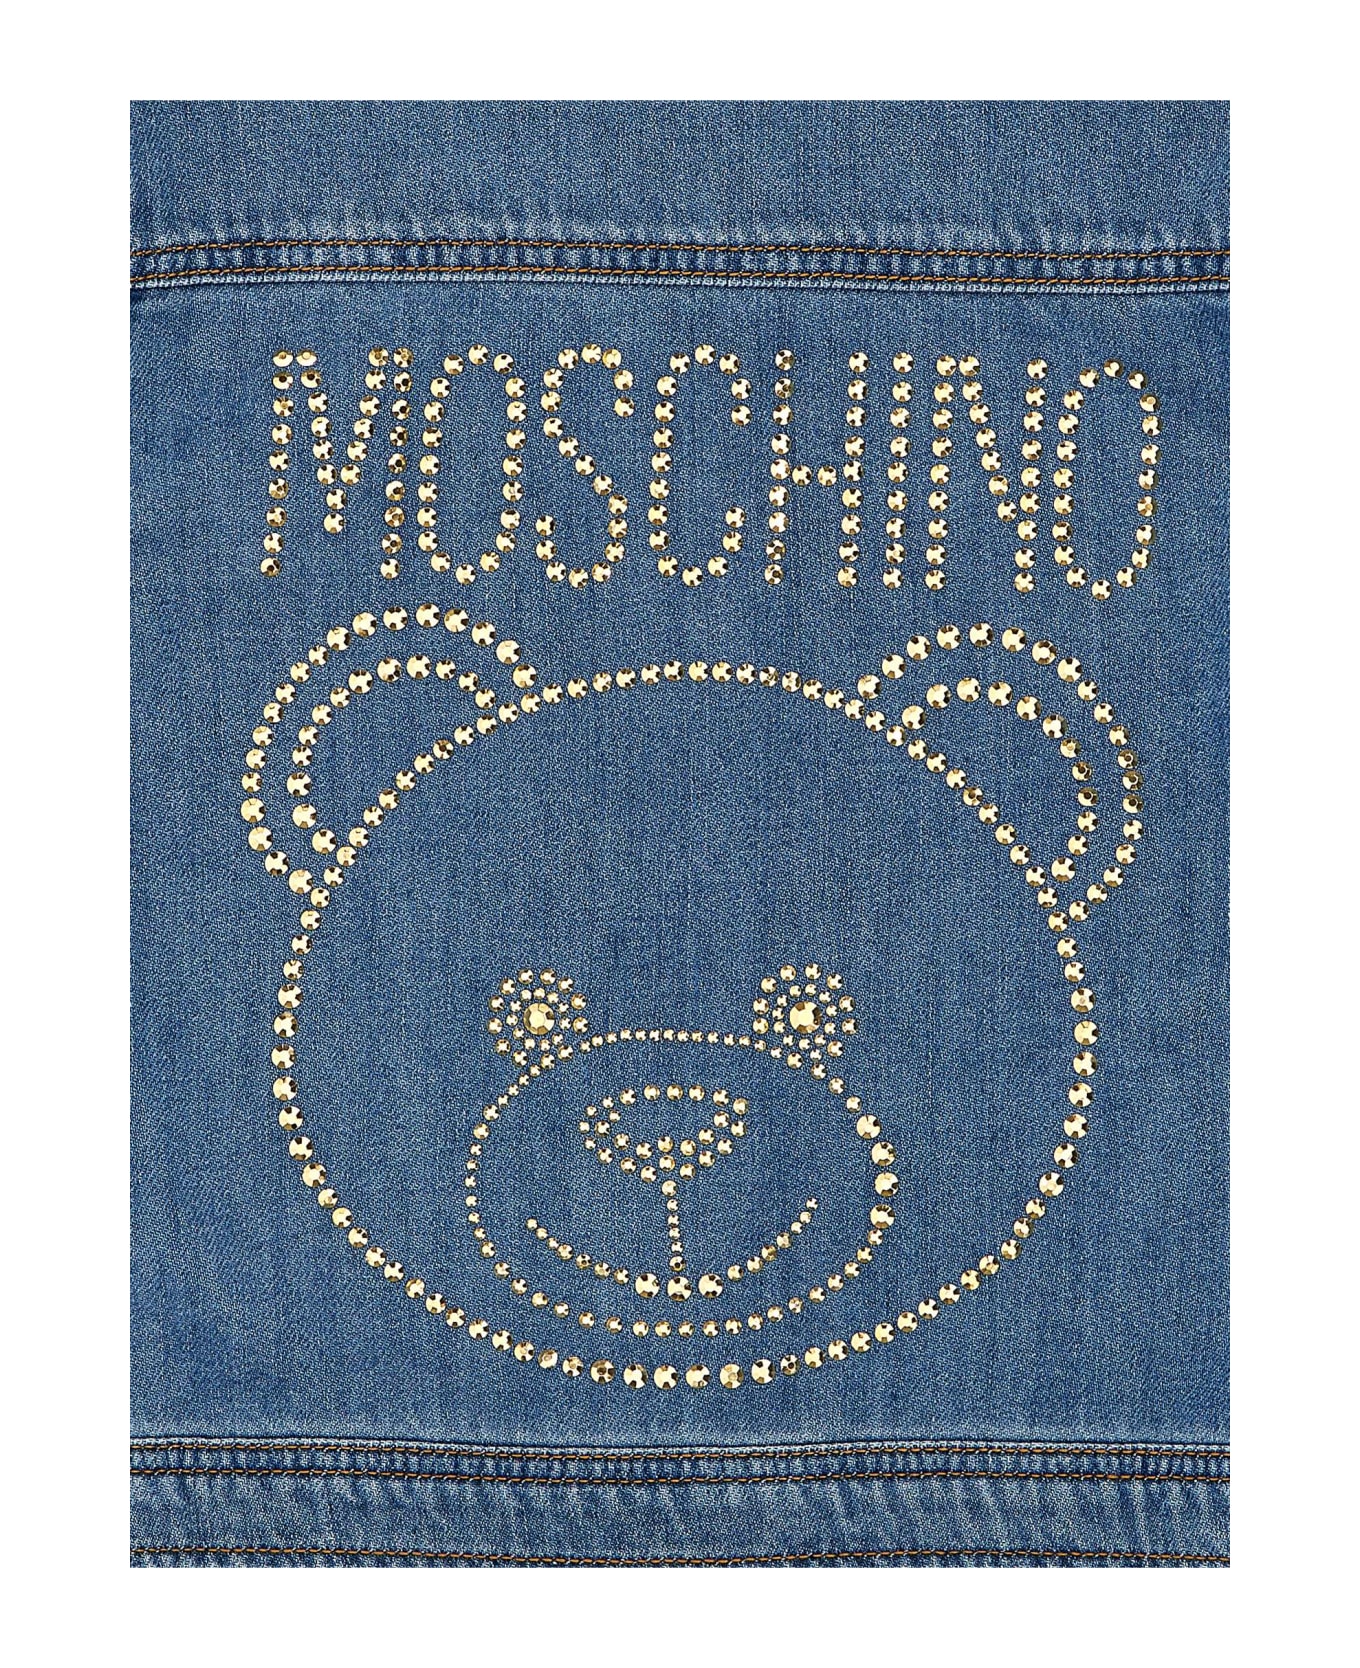 Moschino Logo Denim Jacket - Light Blue